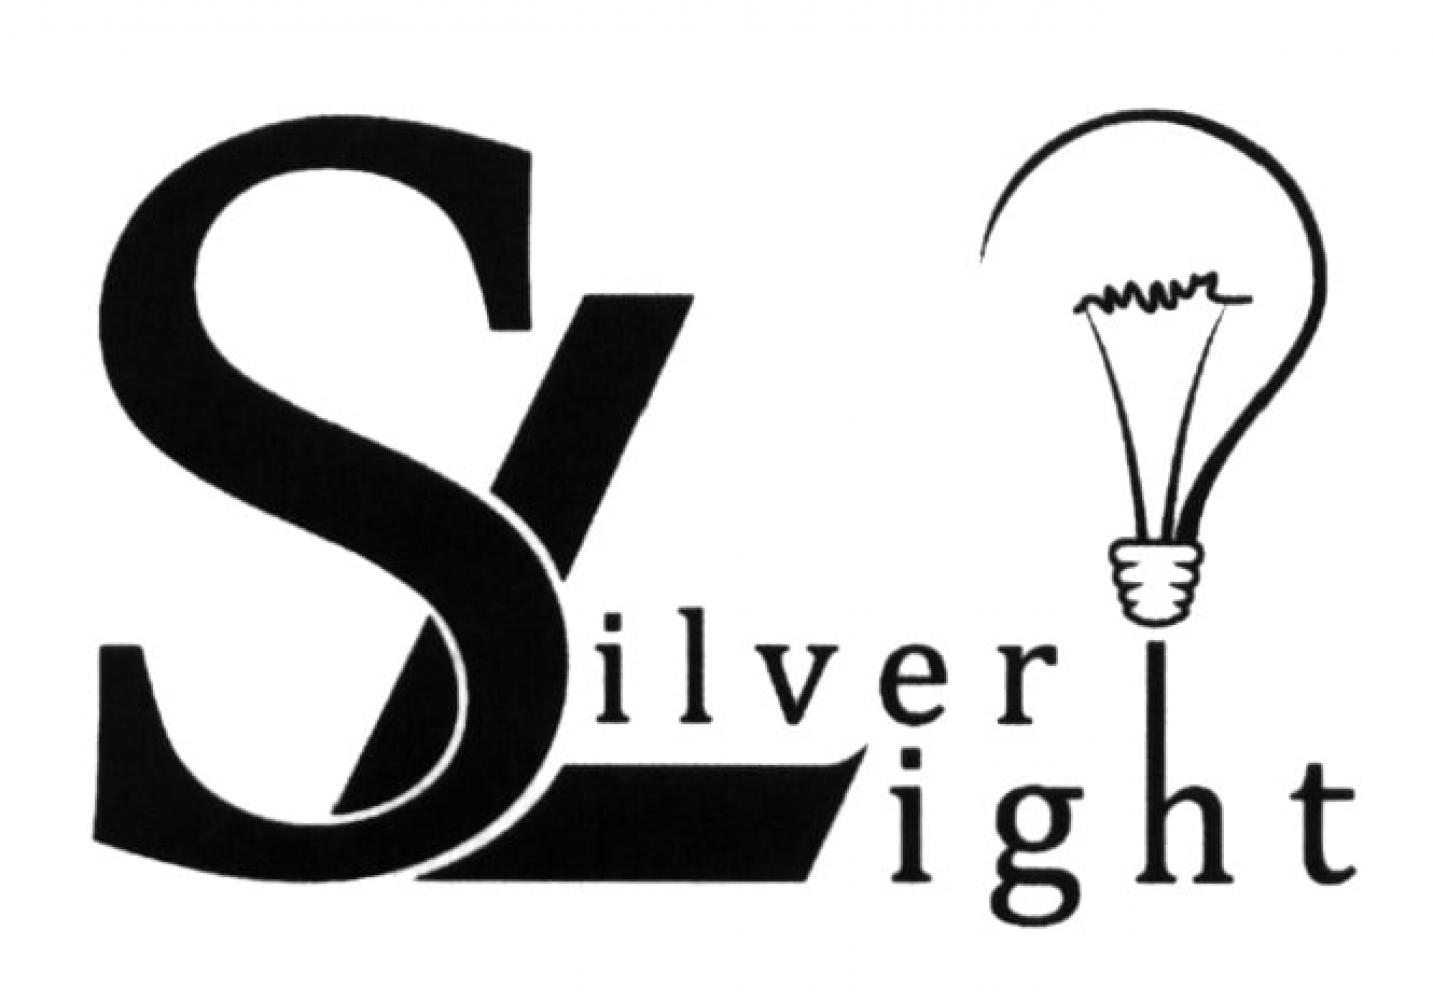 SilverLight